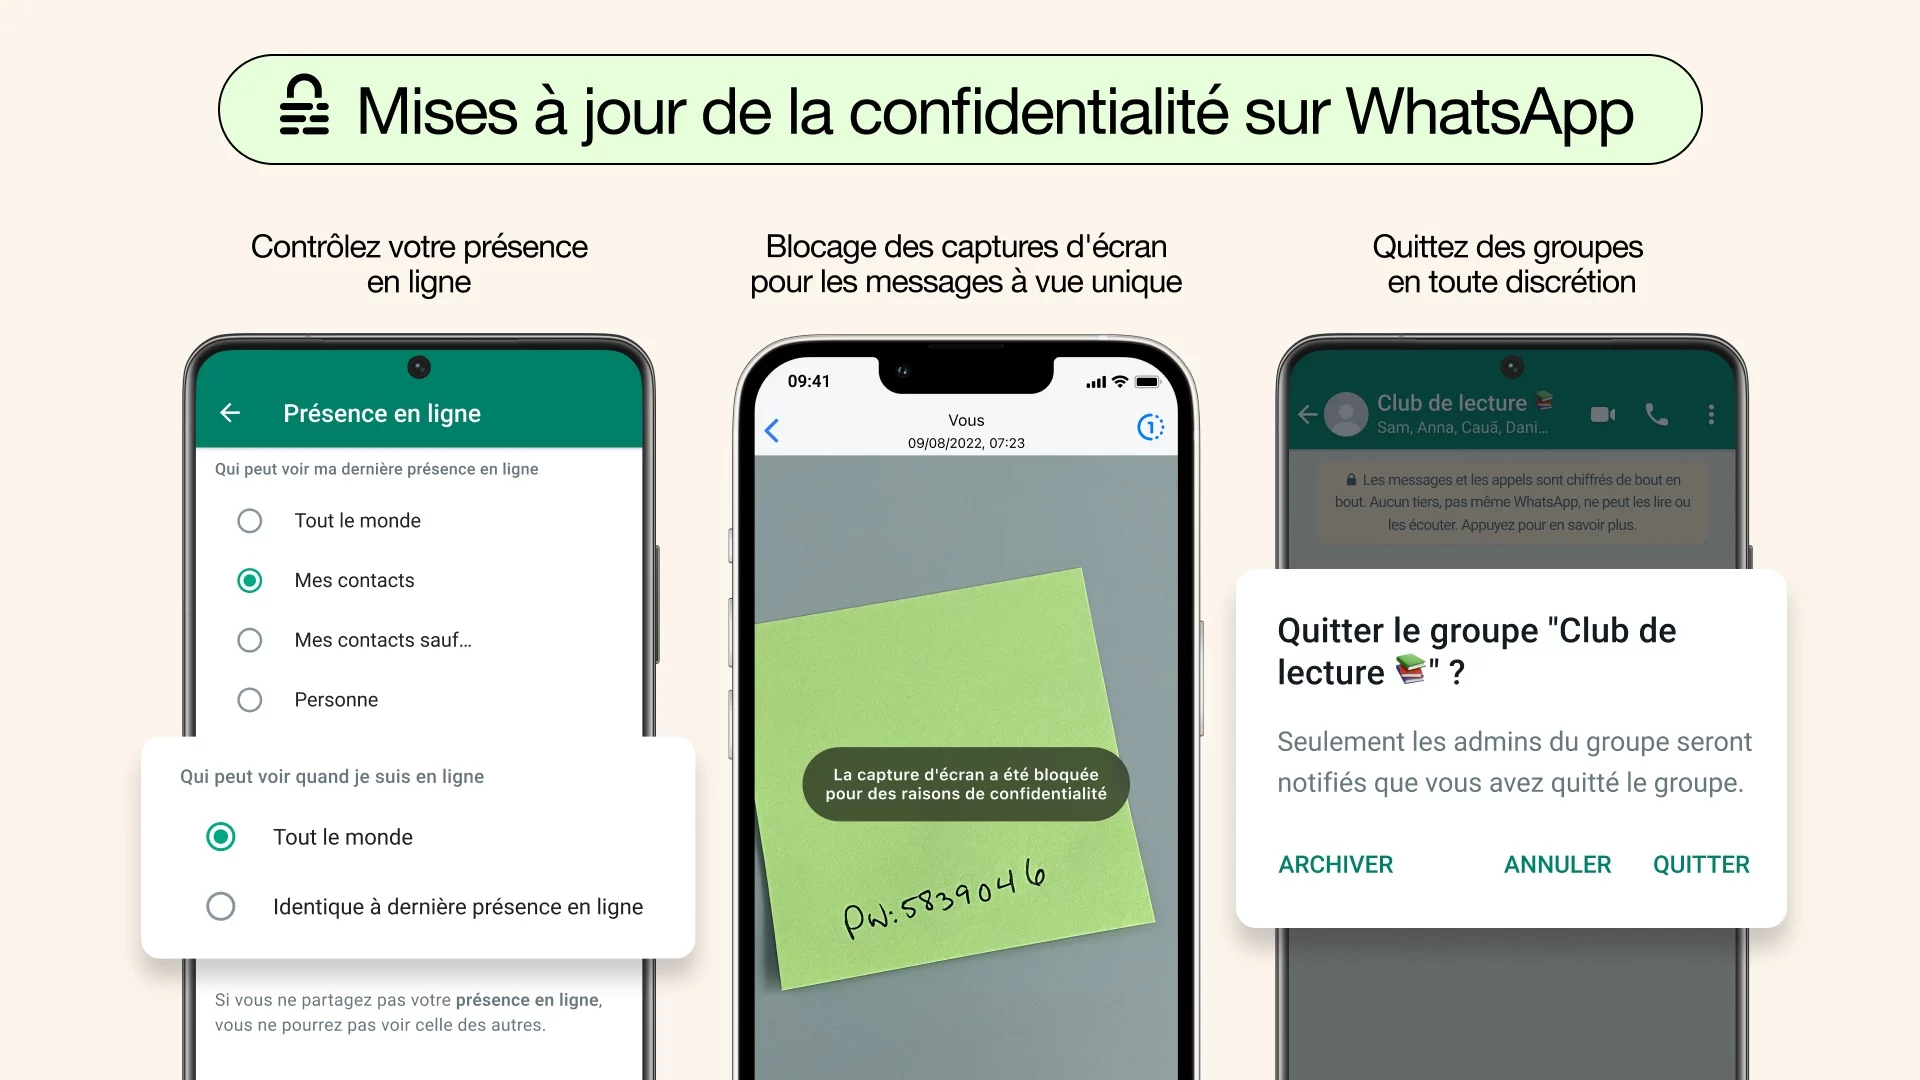 French WhatsApp Global Privacy News